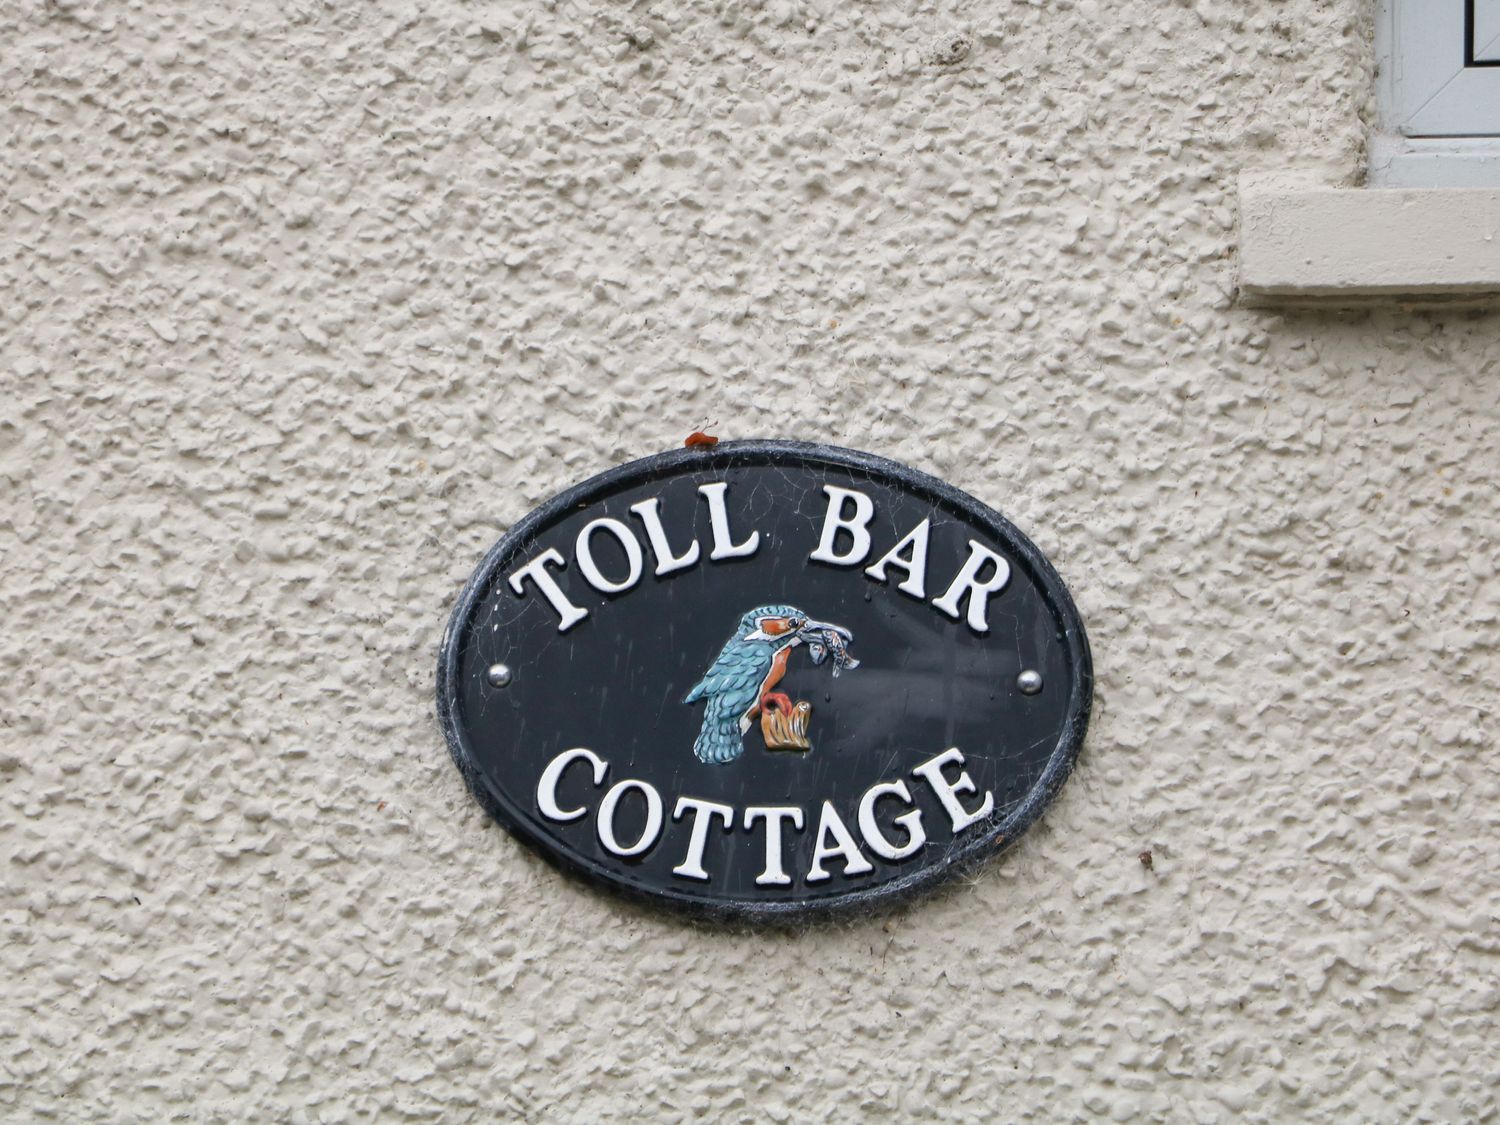 Toll Bar Cottage, Baslow, Derbyshire. Three-bedroom riverside home near amenities. Woodburning stove